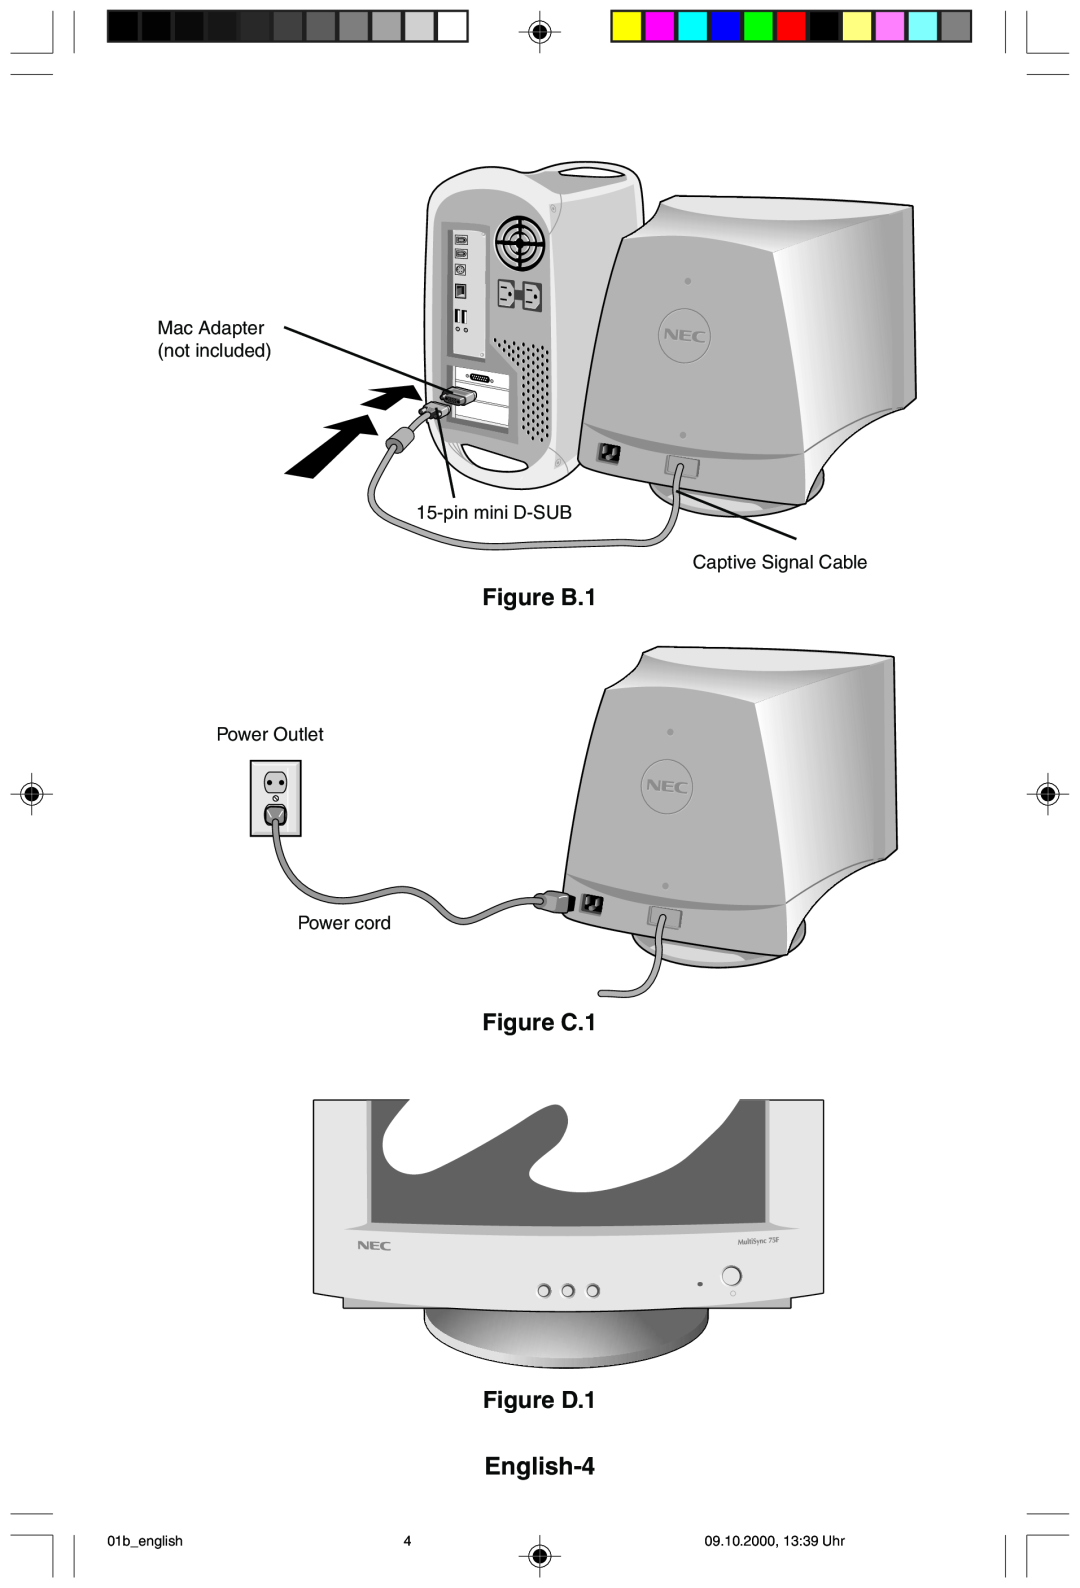 NEC 95F English-4, Figure B.1, Figure C.1 Figure D.1, Mac Adapter not included 15-pin mini D-SUB Captive Signal Cable 